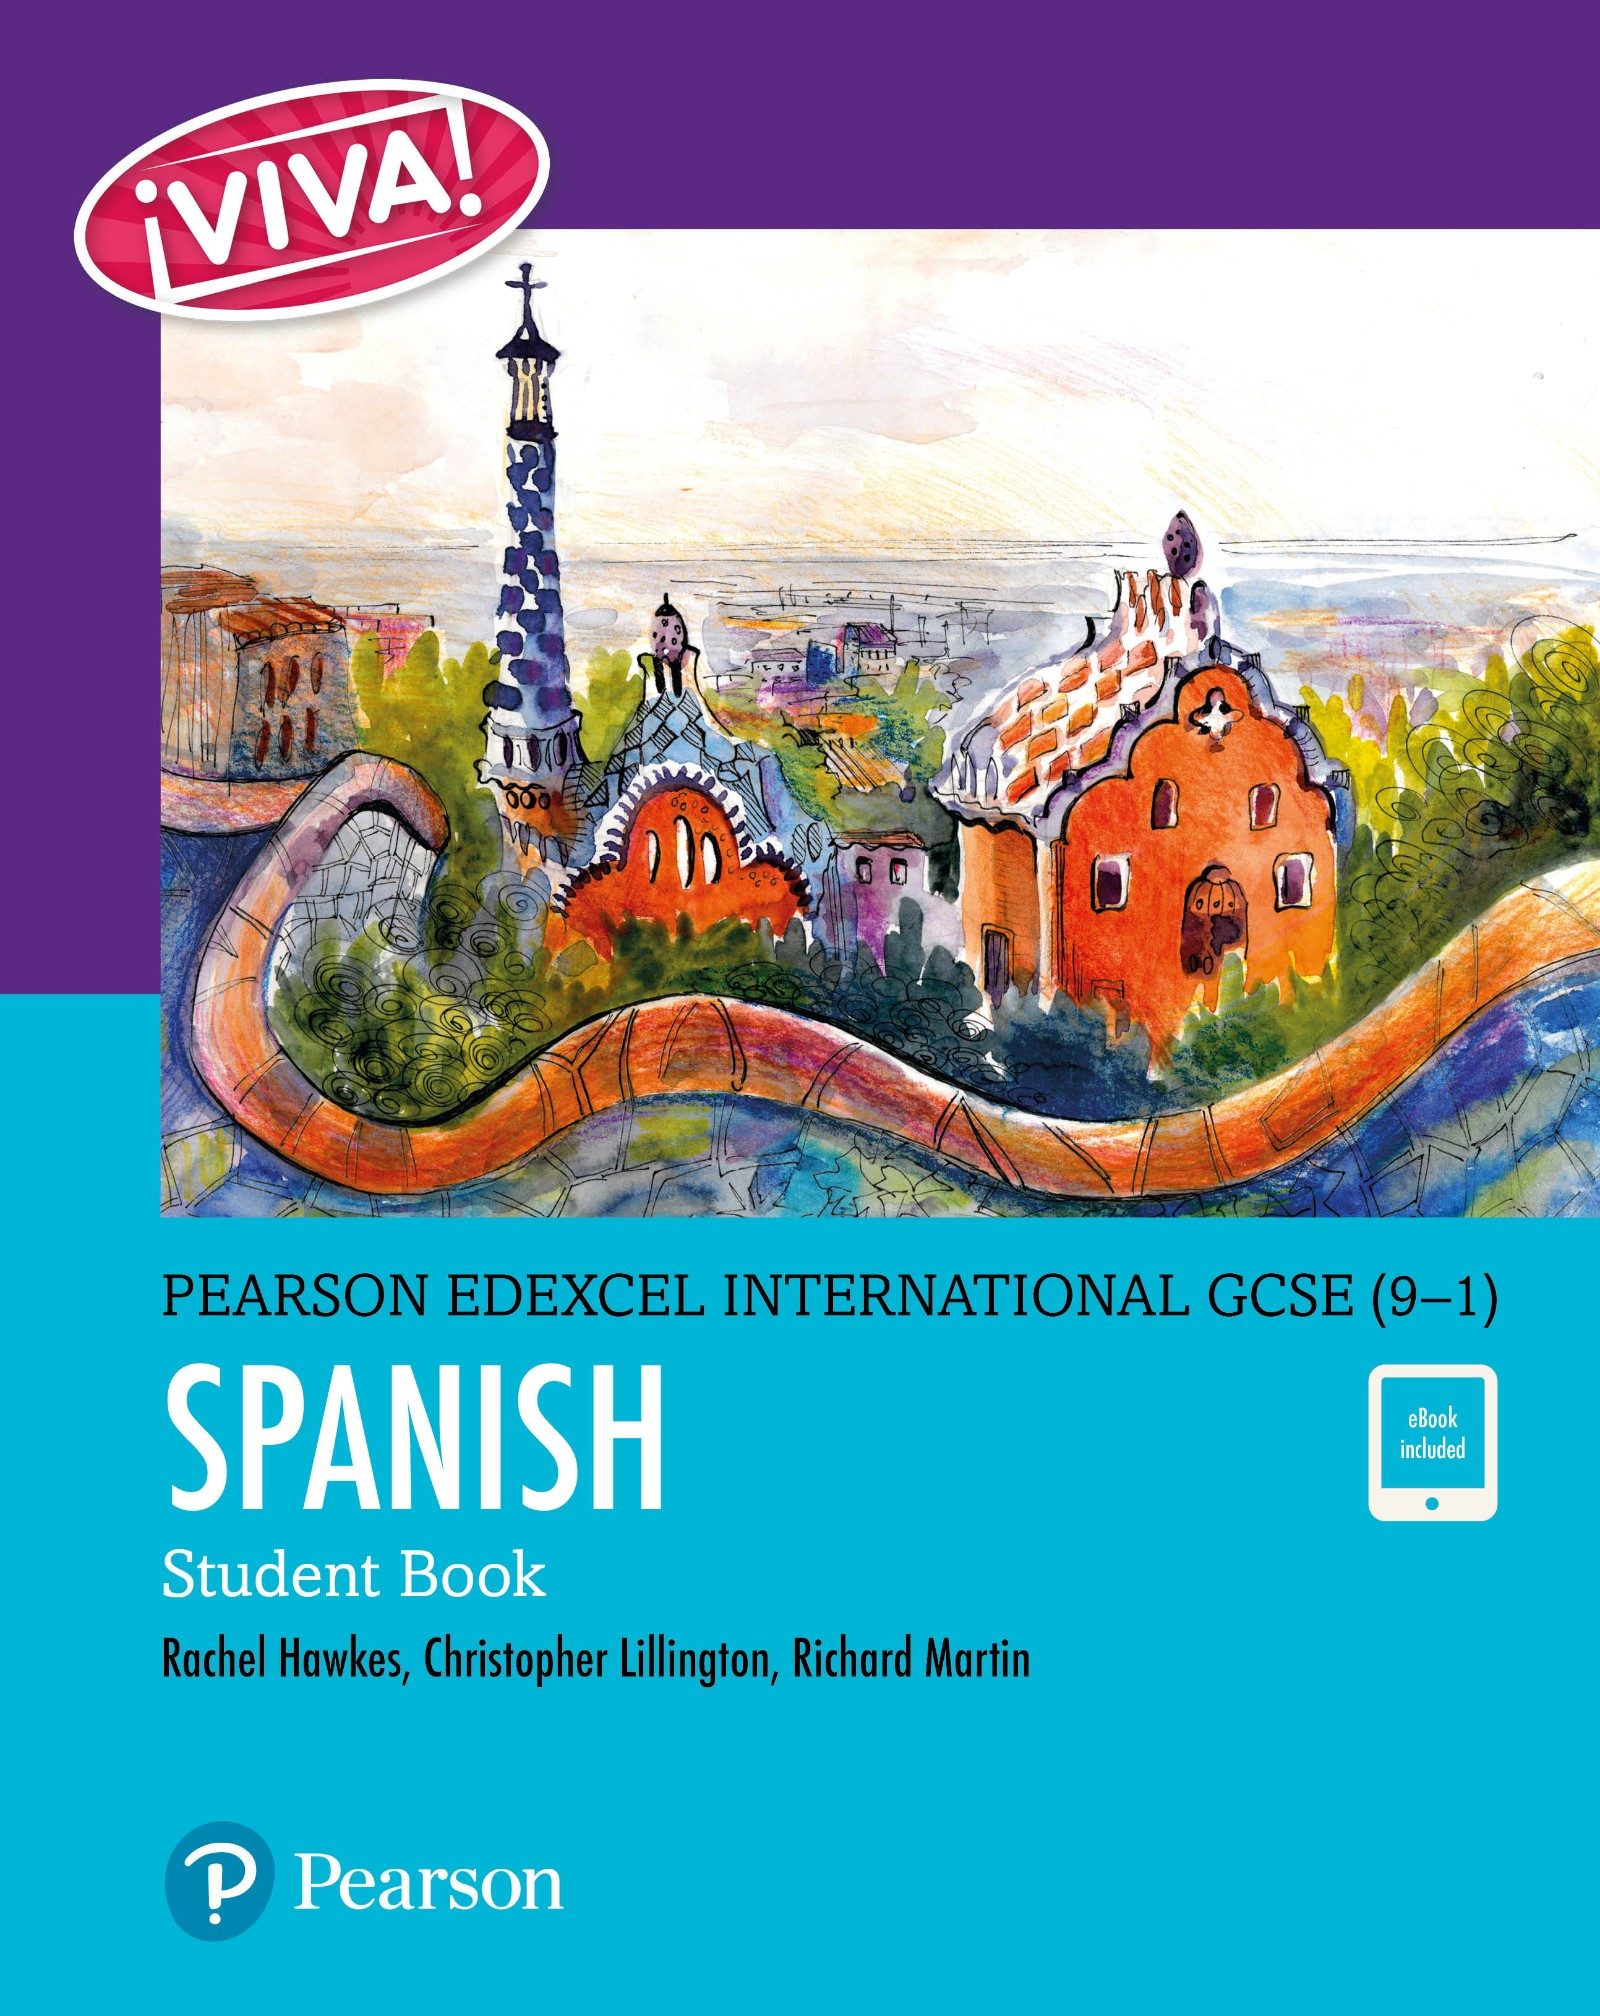 Featured image for “Pearson Edexcel International GCSE (9–1) Spanish”